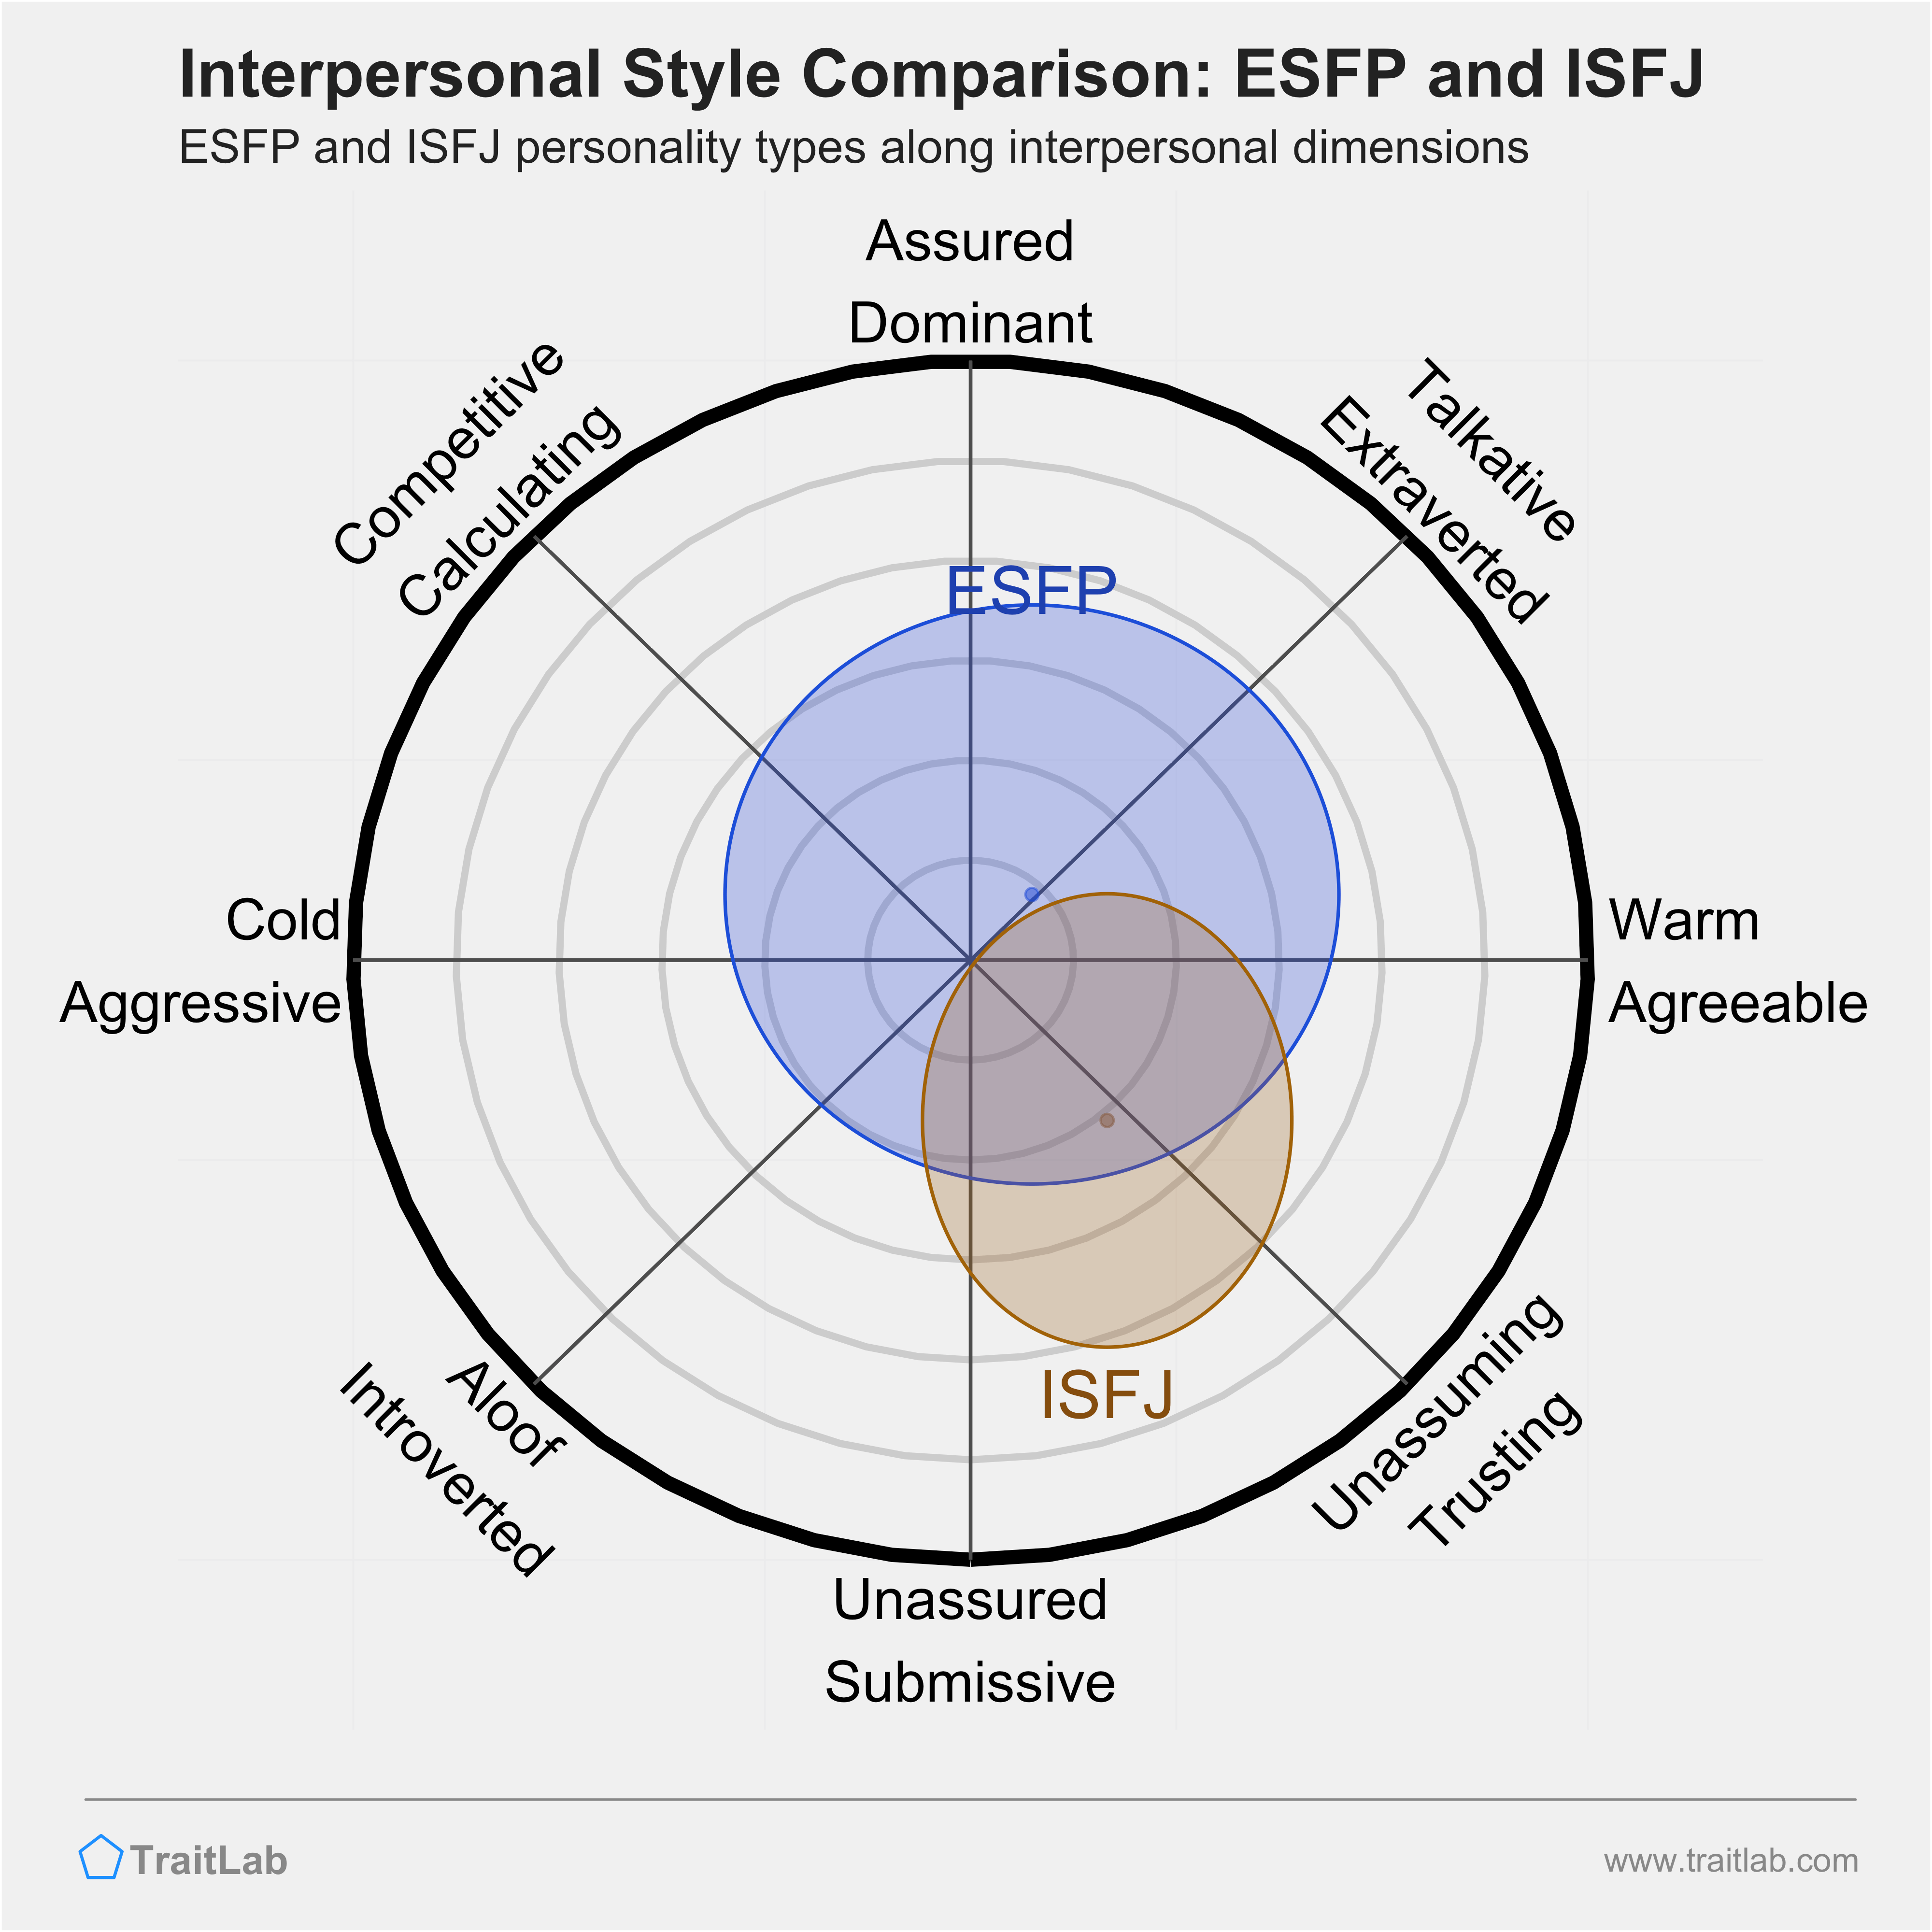 ESFP and ISFJ comparison across interpersonal dimensions